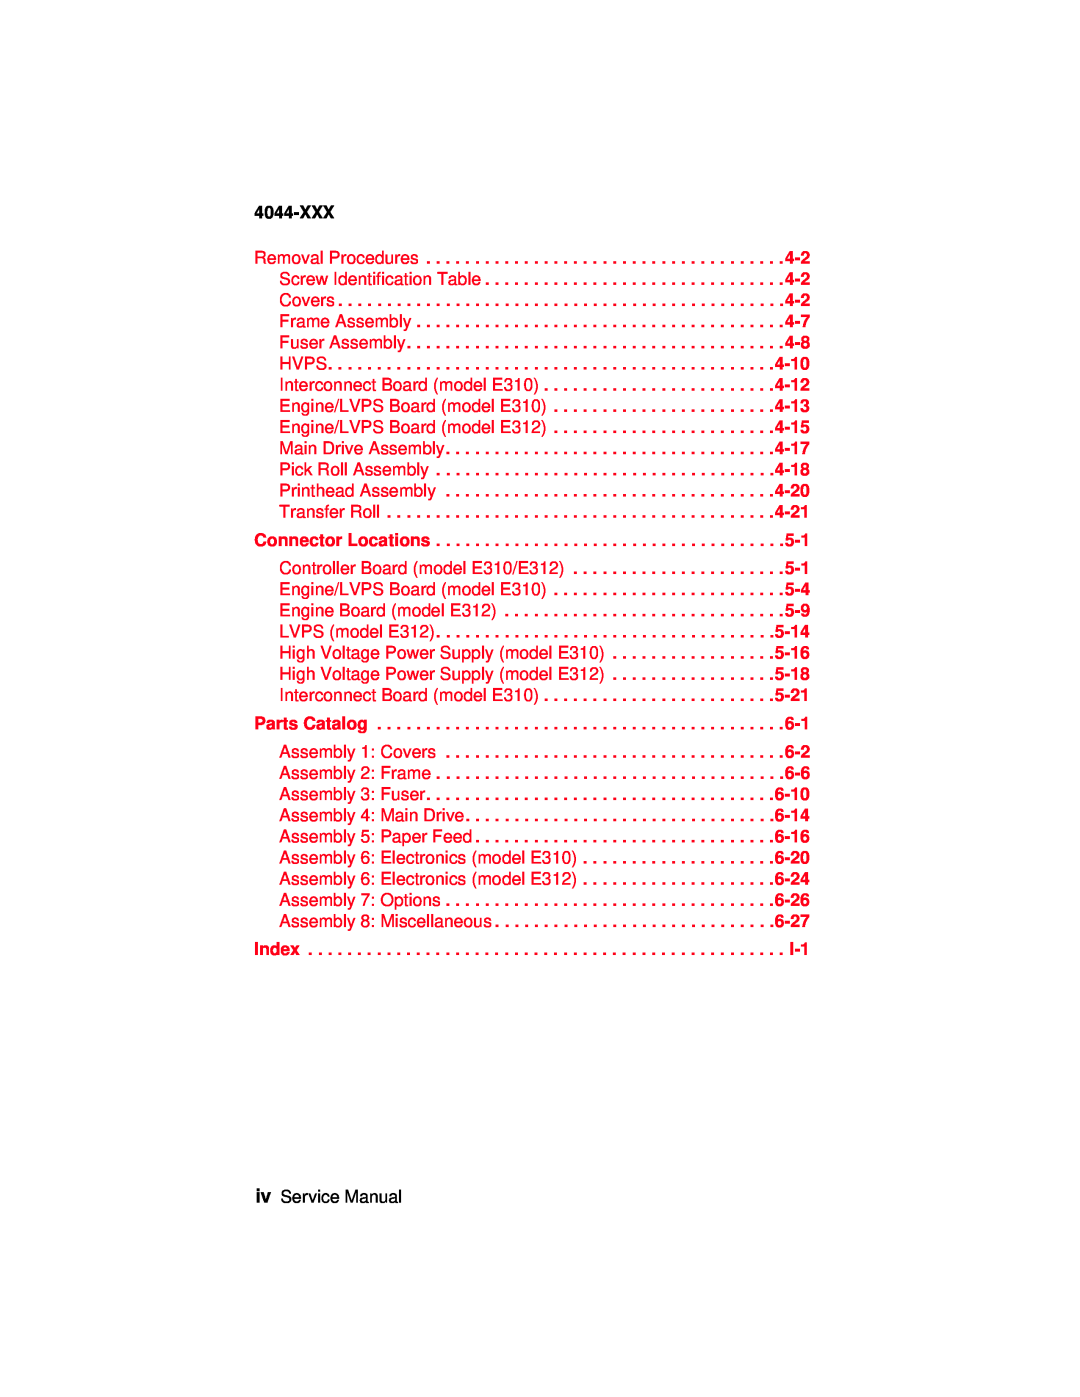 Lexmark 4044-XXX, E310 manual ivService Manual 